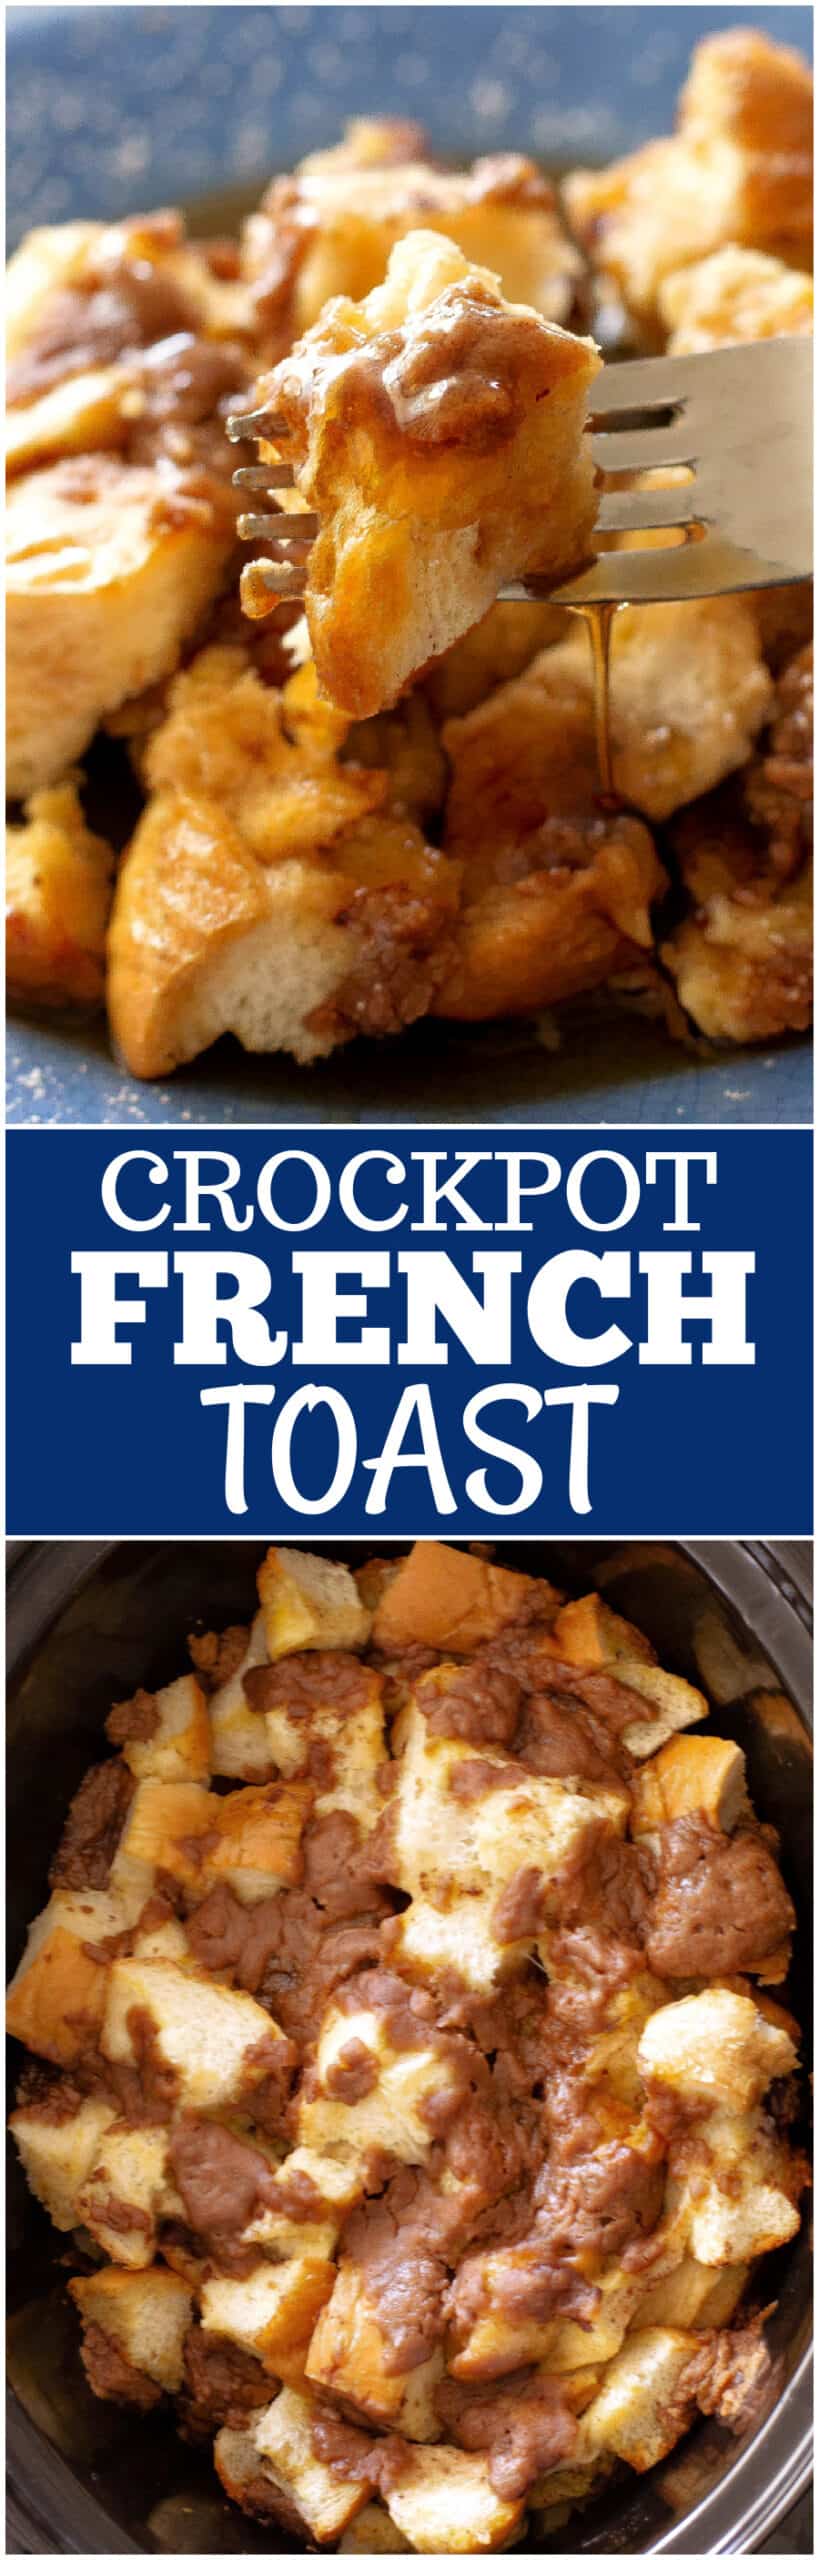 crockpot french toast